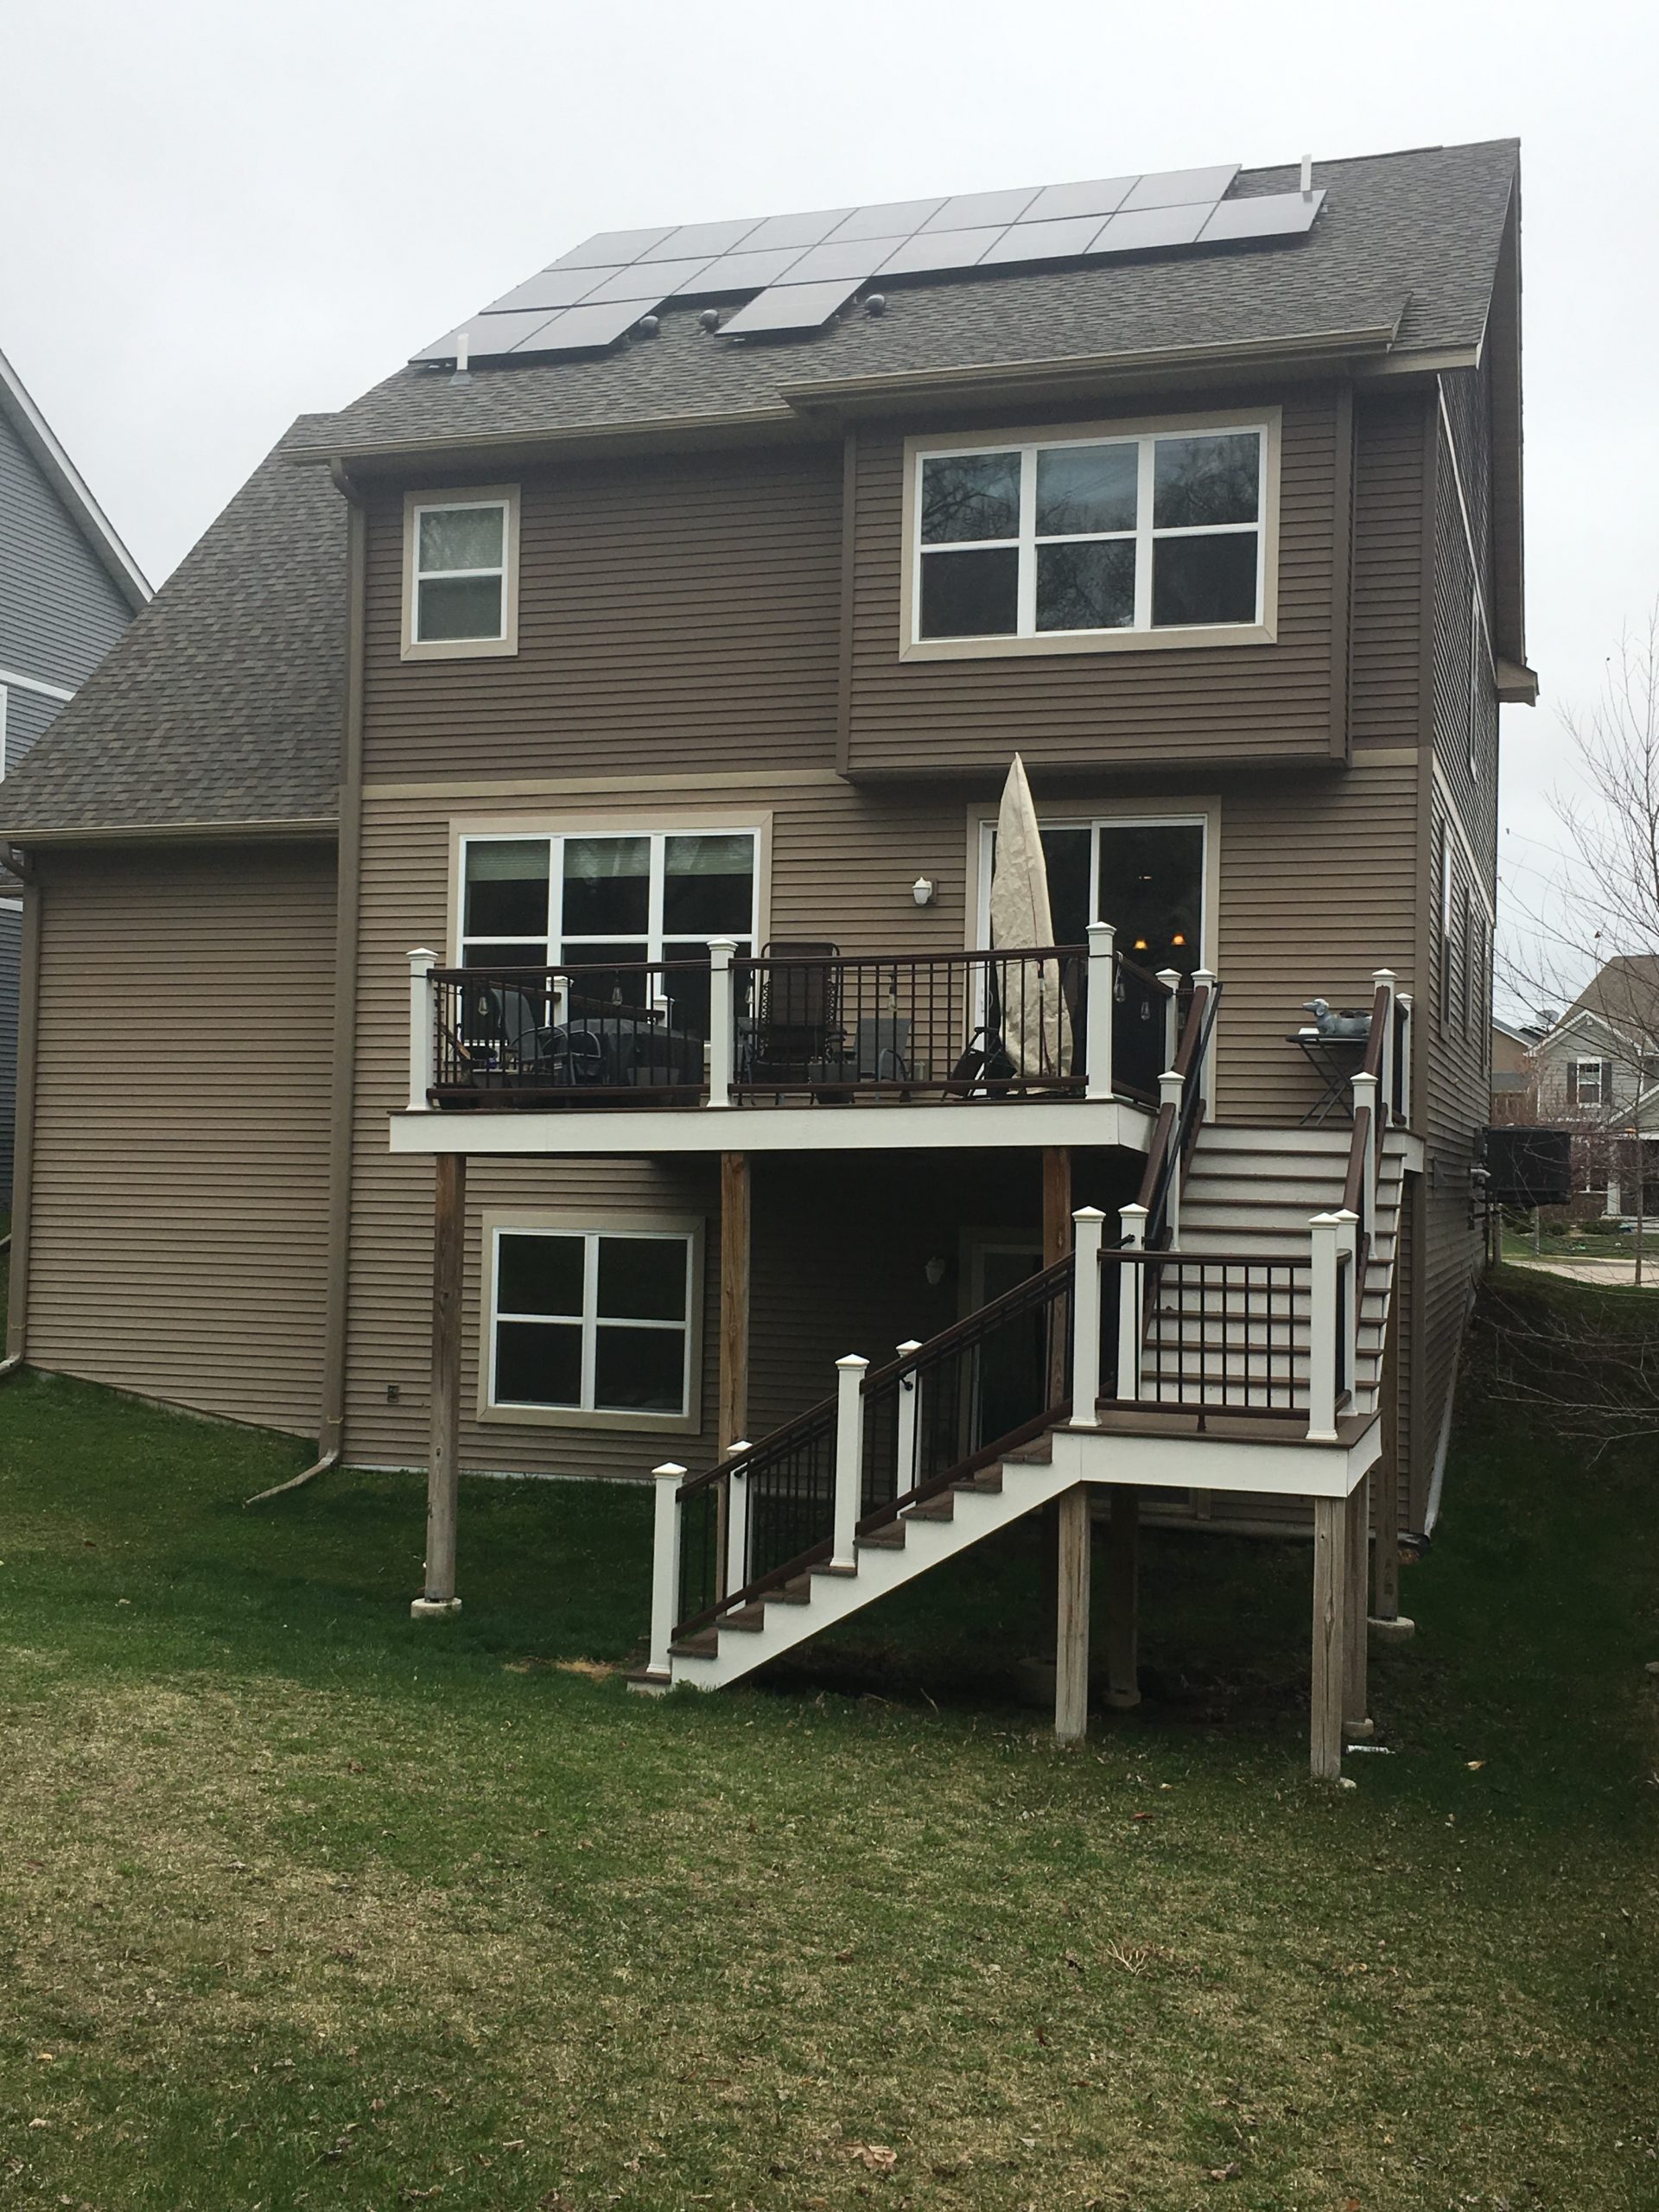 Chaska, MN 5.94kW Rooftop Residential Solar